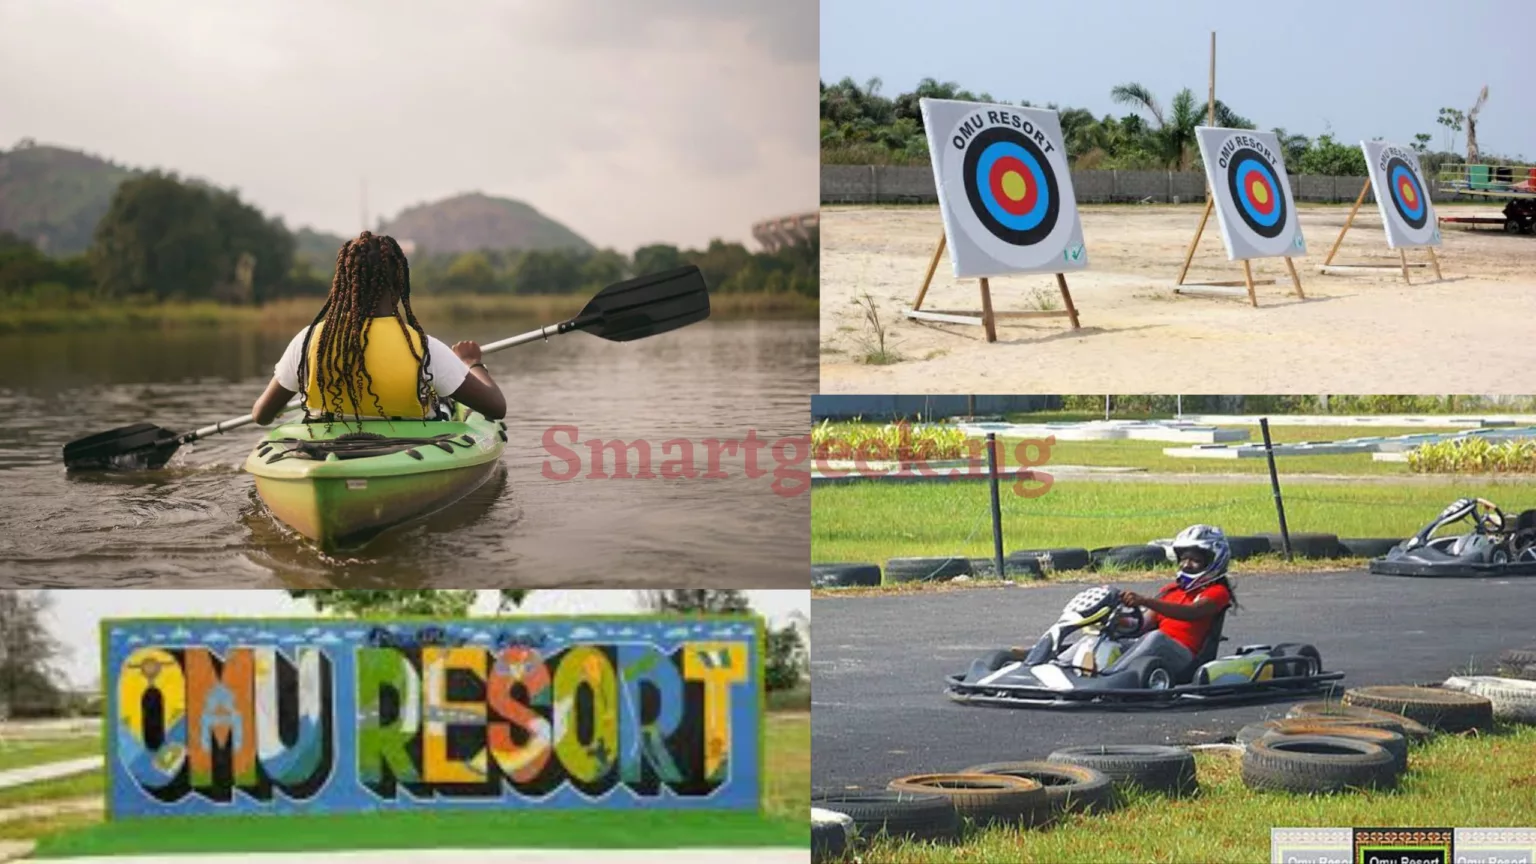 Omu Resort Top Facilities